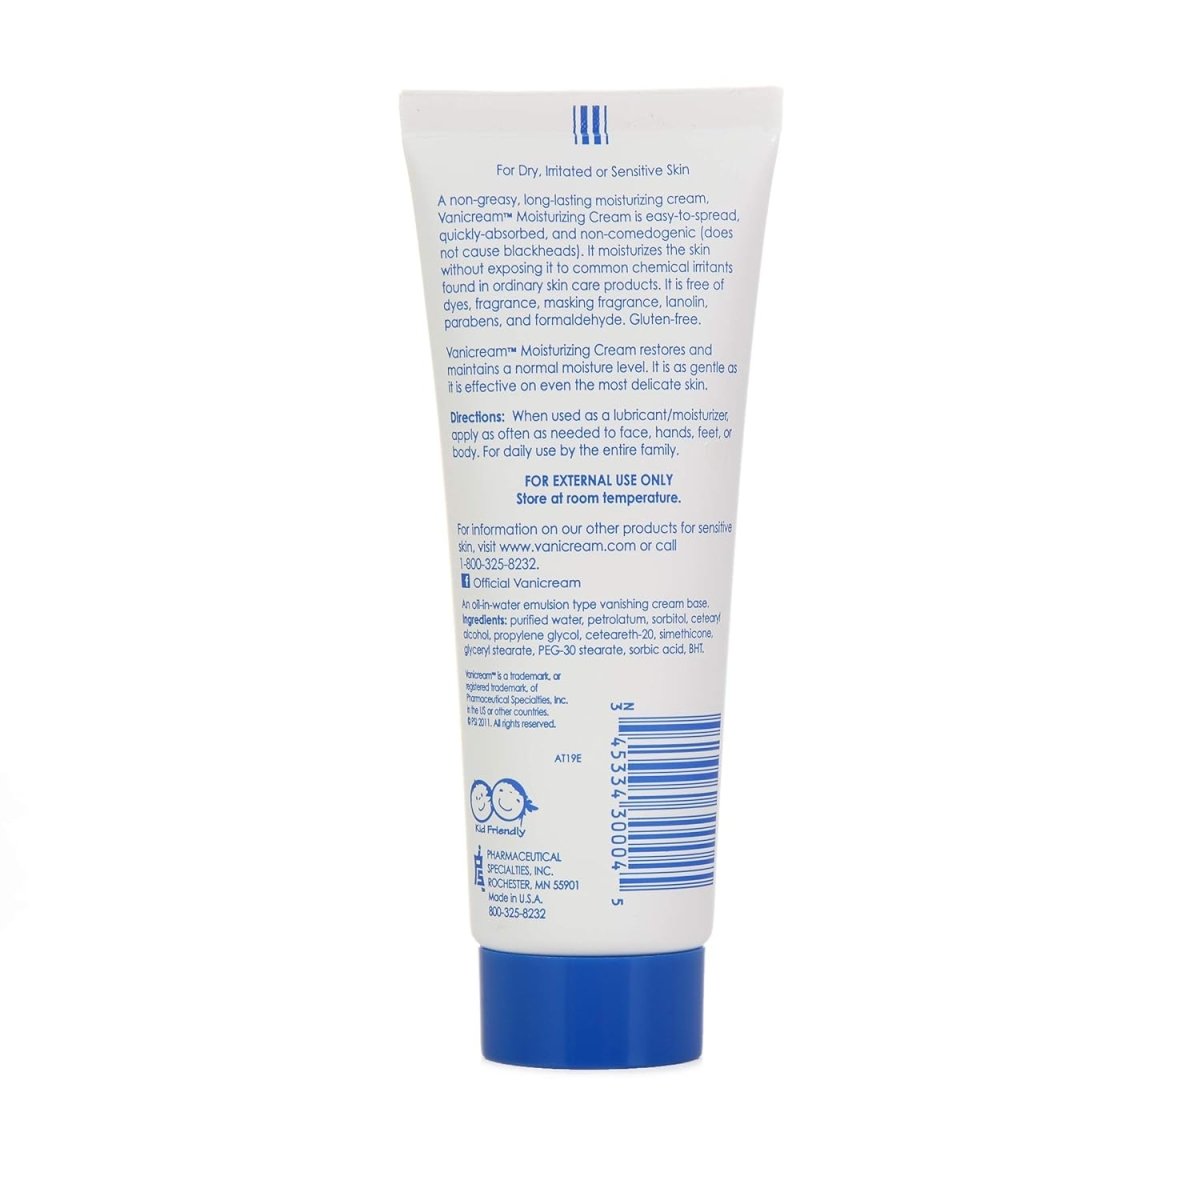 Pharmaceutical SpecialtiesVanicream Moisturizing Skin Cream for Eczema & Psoriasis - 4 oz TubeSkin CreamsSoothems